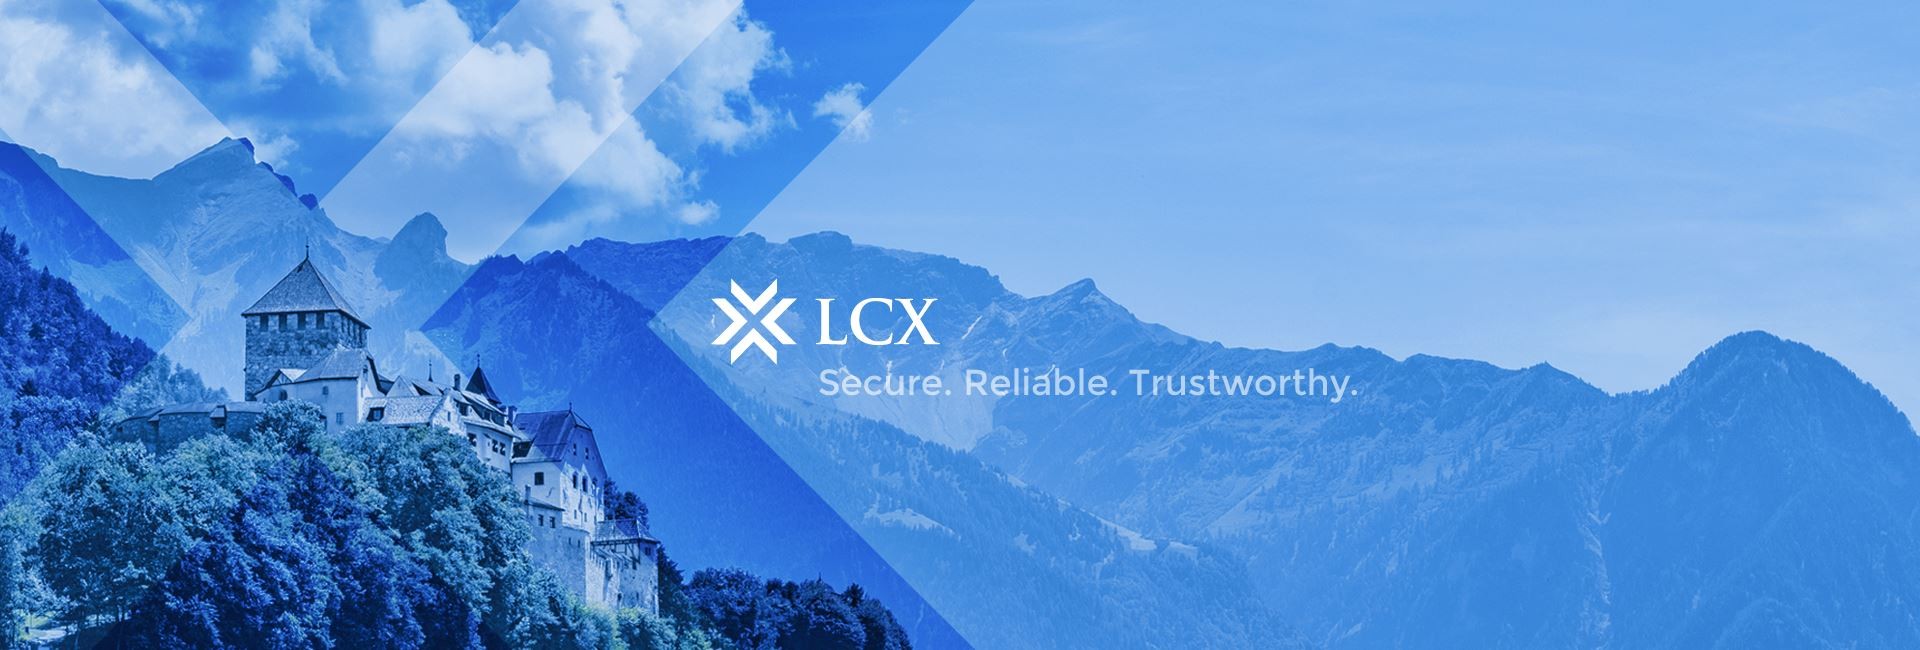 LCX loses $6.8 million